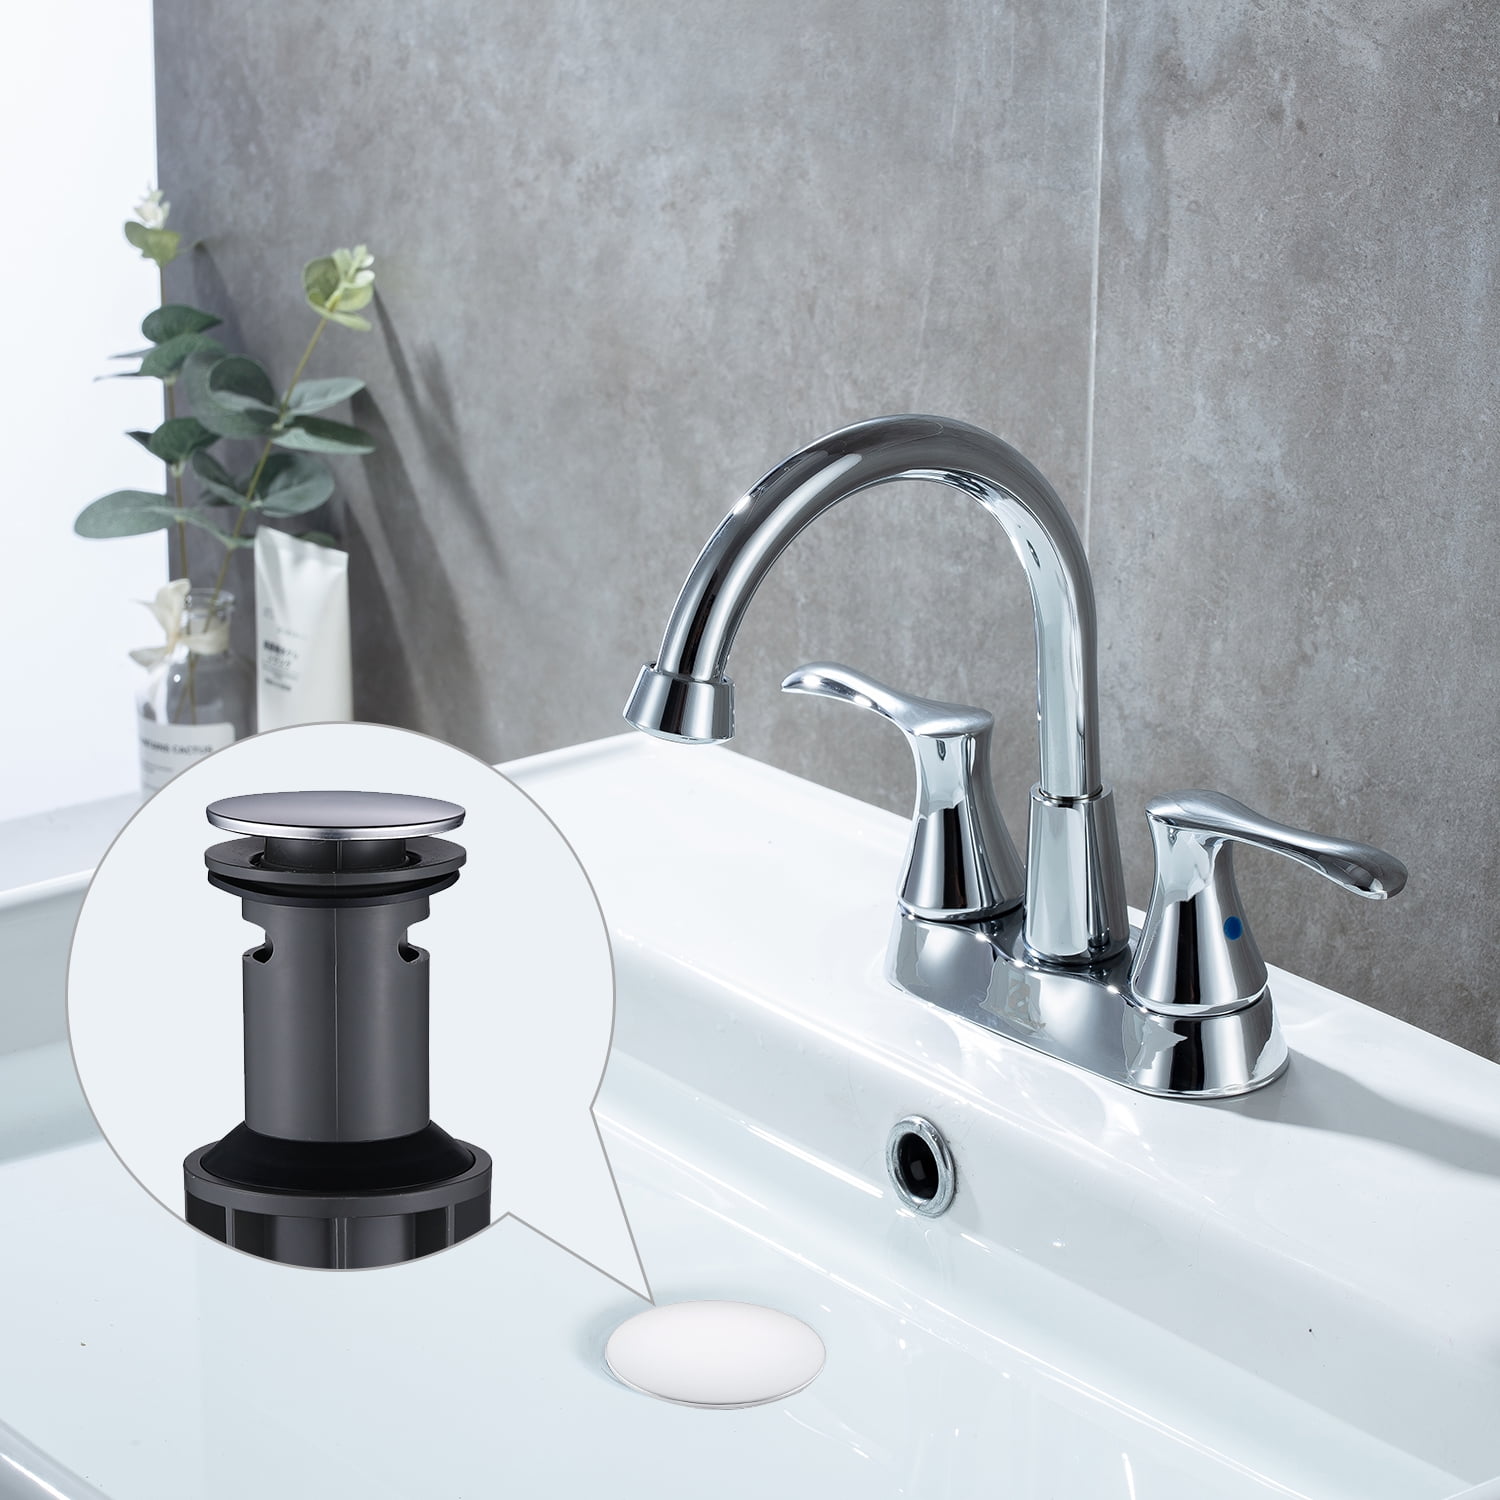 Details about   4/2PCS Universal Wash Basin Bounce Drain Filter Pop Bathroom Sink Drain Stopper 